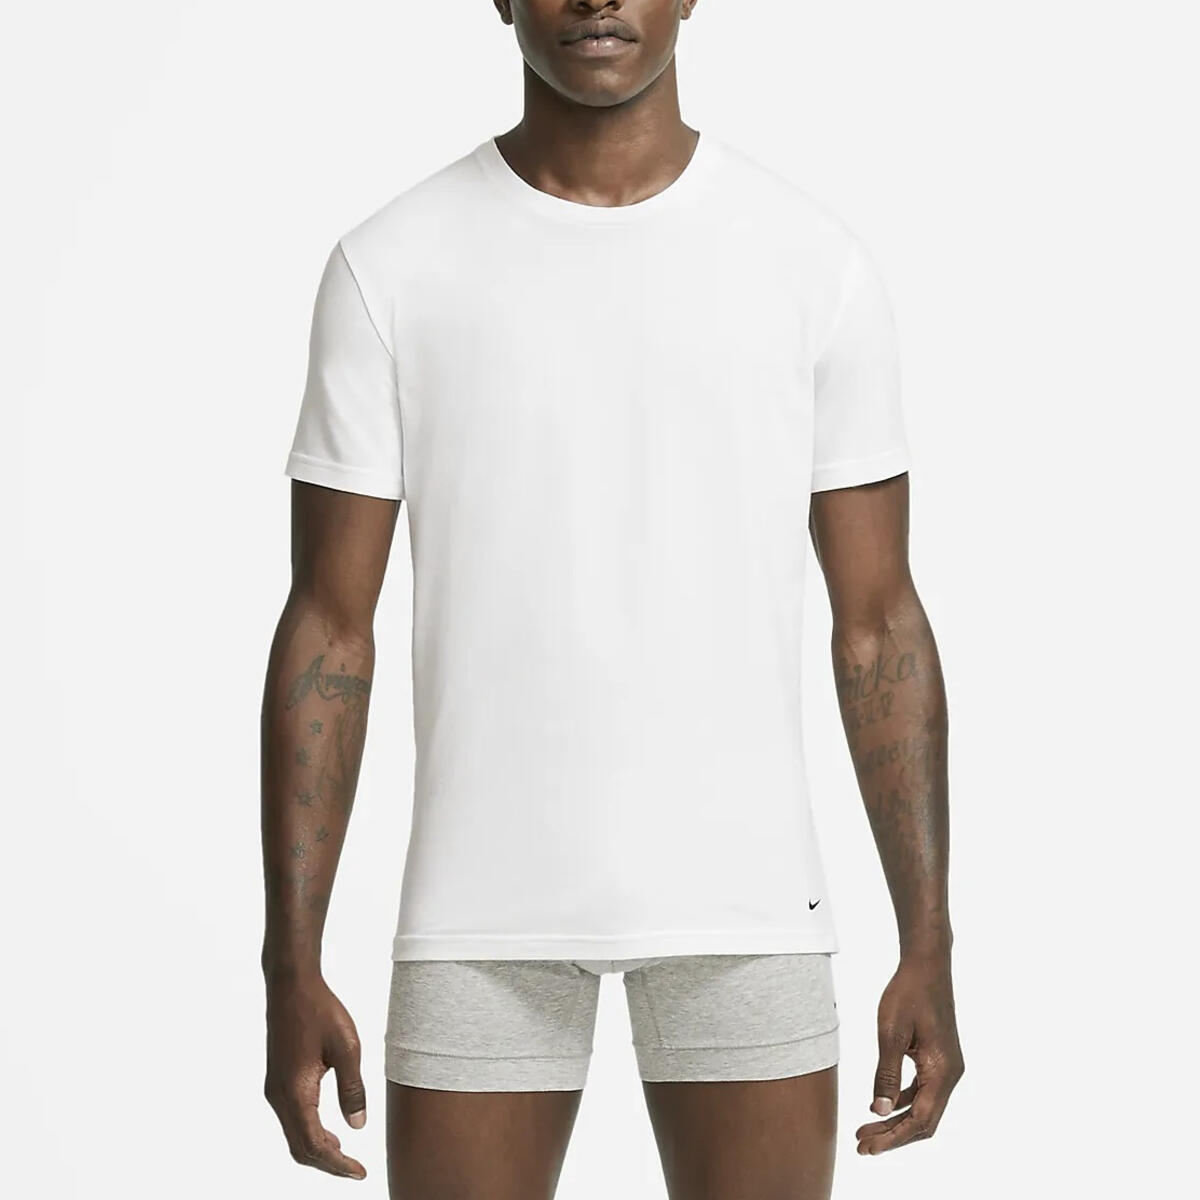 White 2-Pack Cotton Undershirts